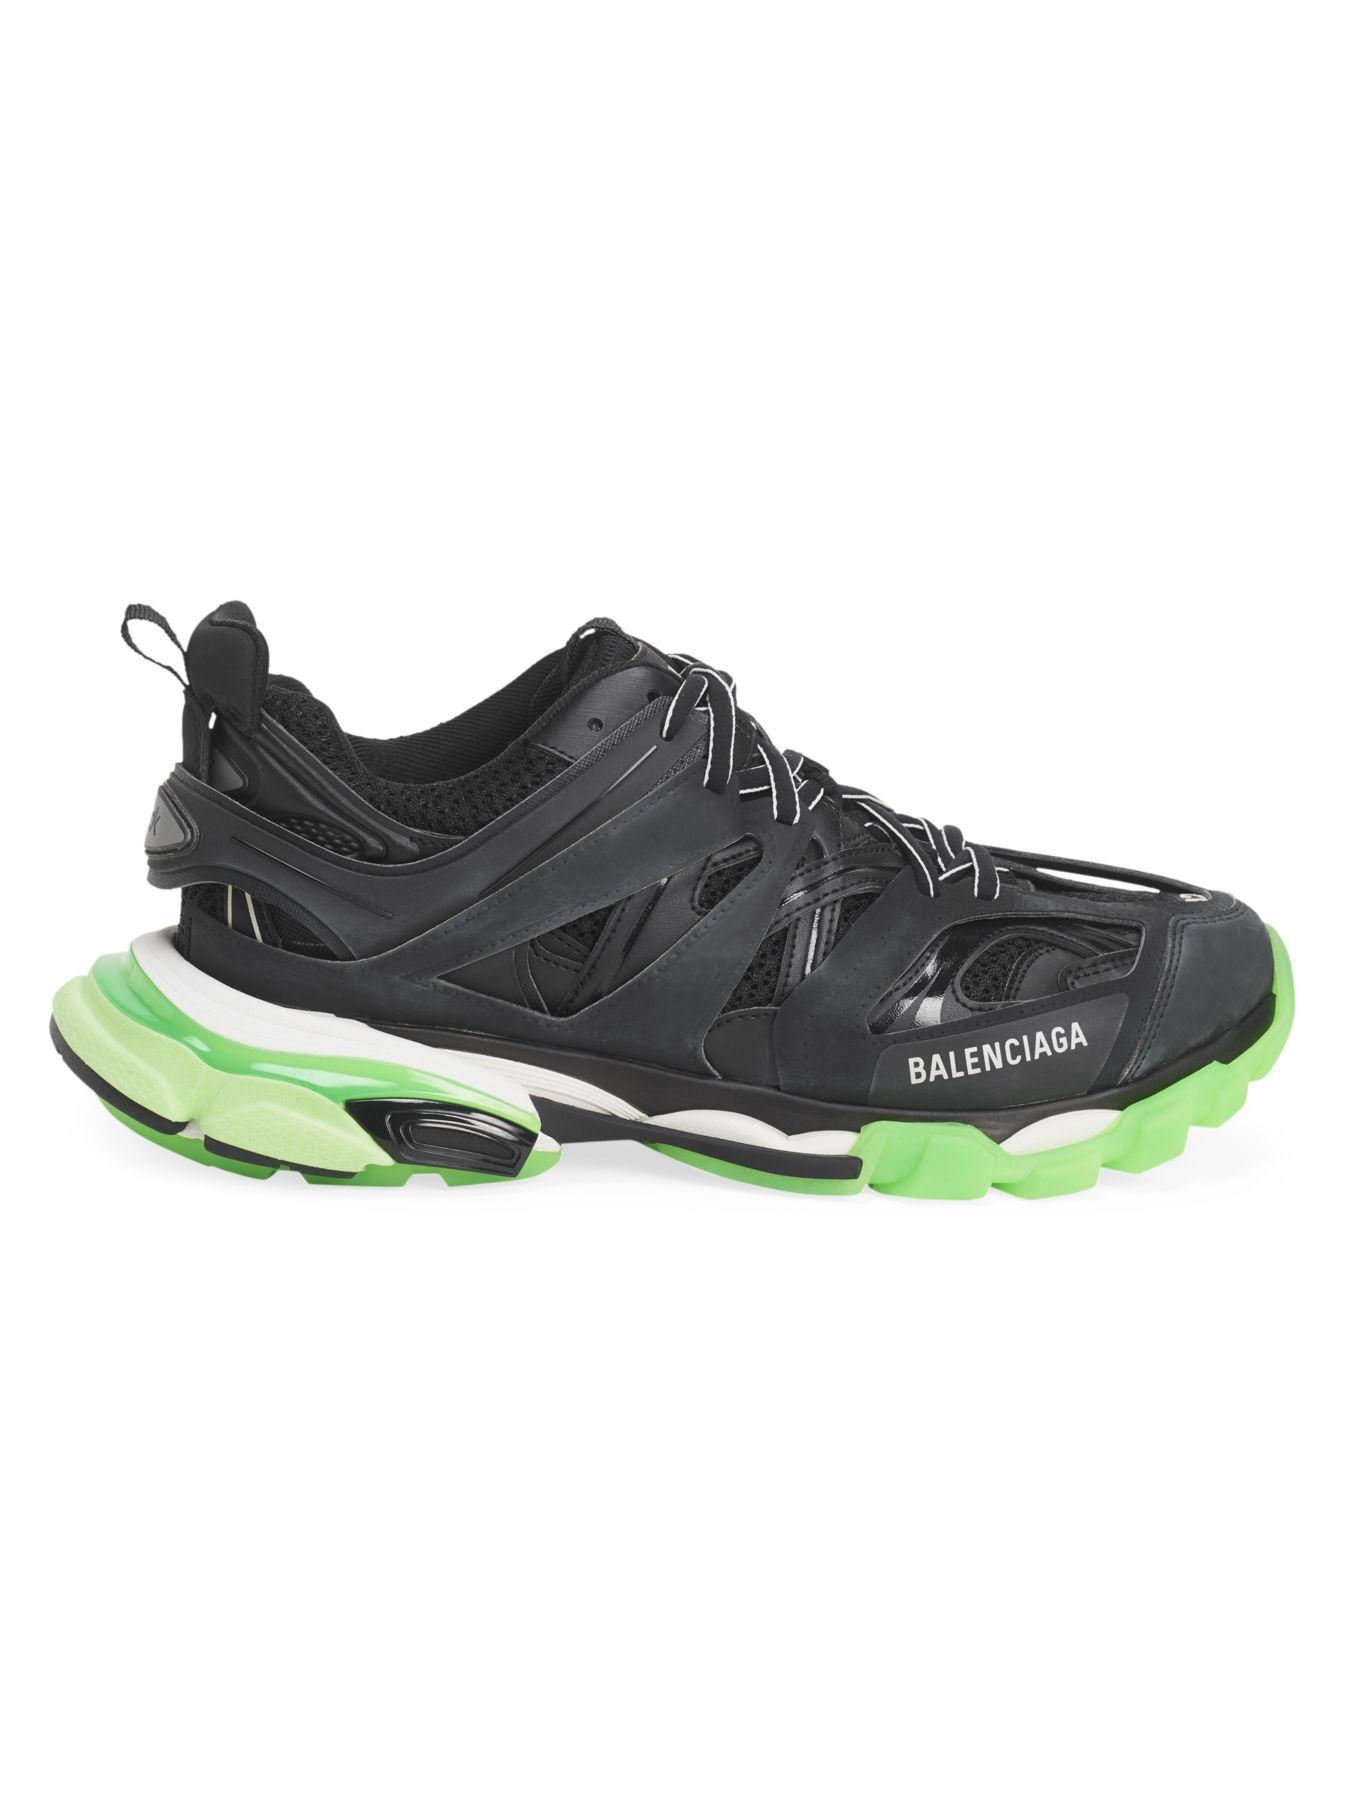 Balenciaga Glow In The Dark Track Sneakers in Black for Men - Lyst